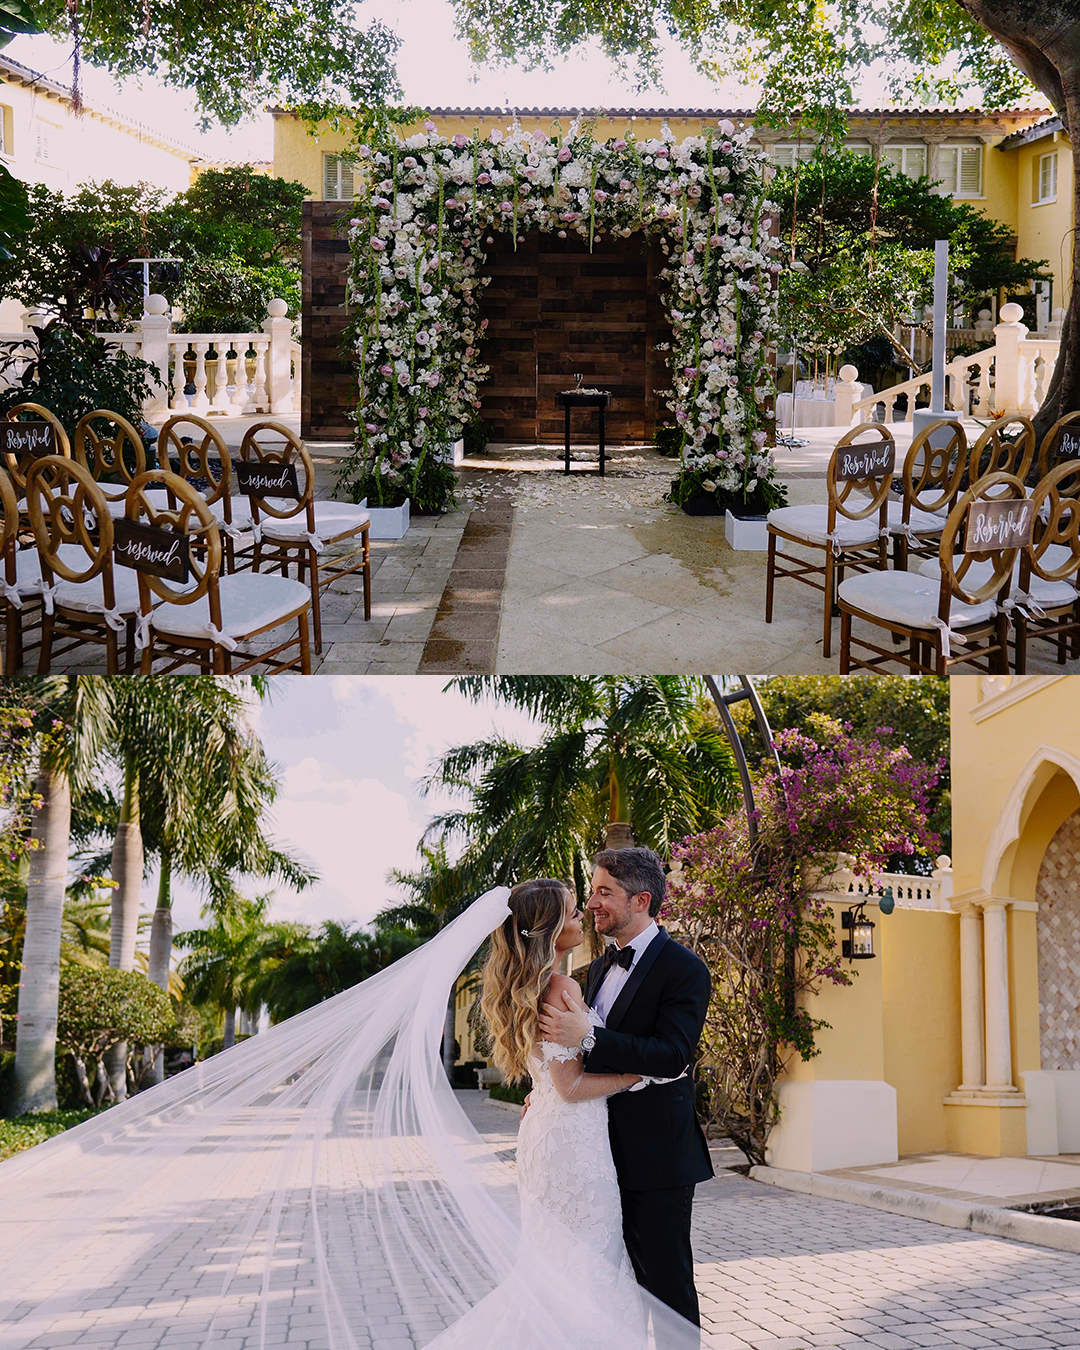 Danielle and Drew, wedding at The Addison Boca Raton, FL - image 3